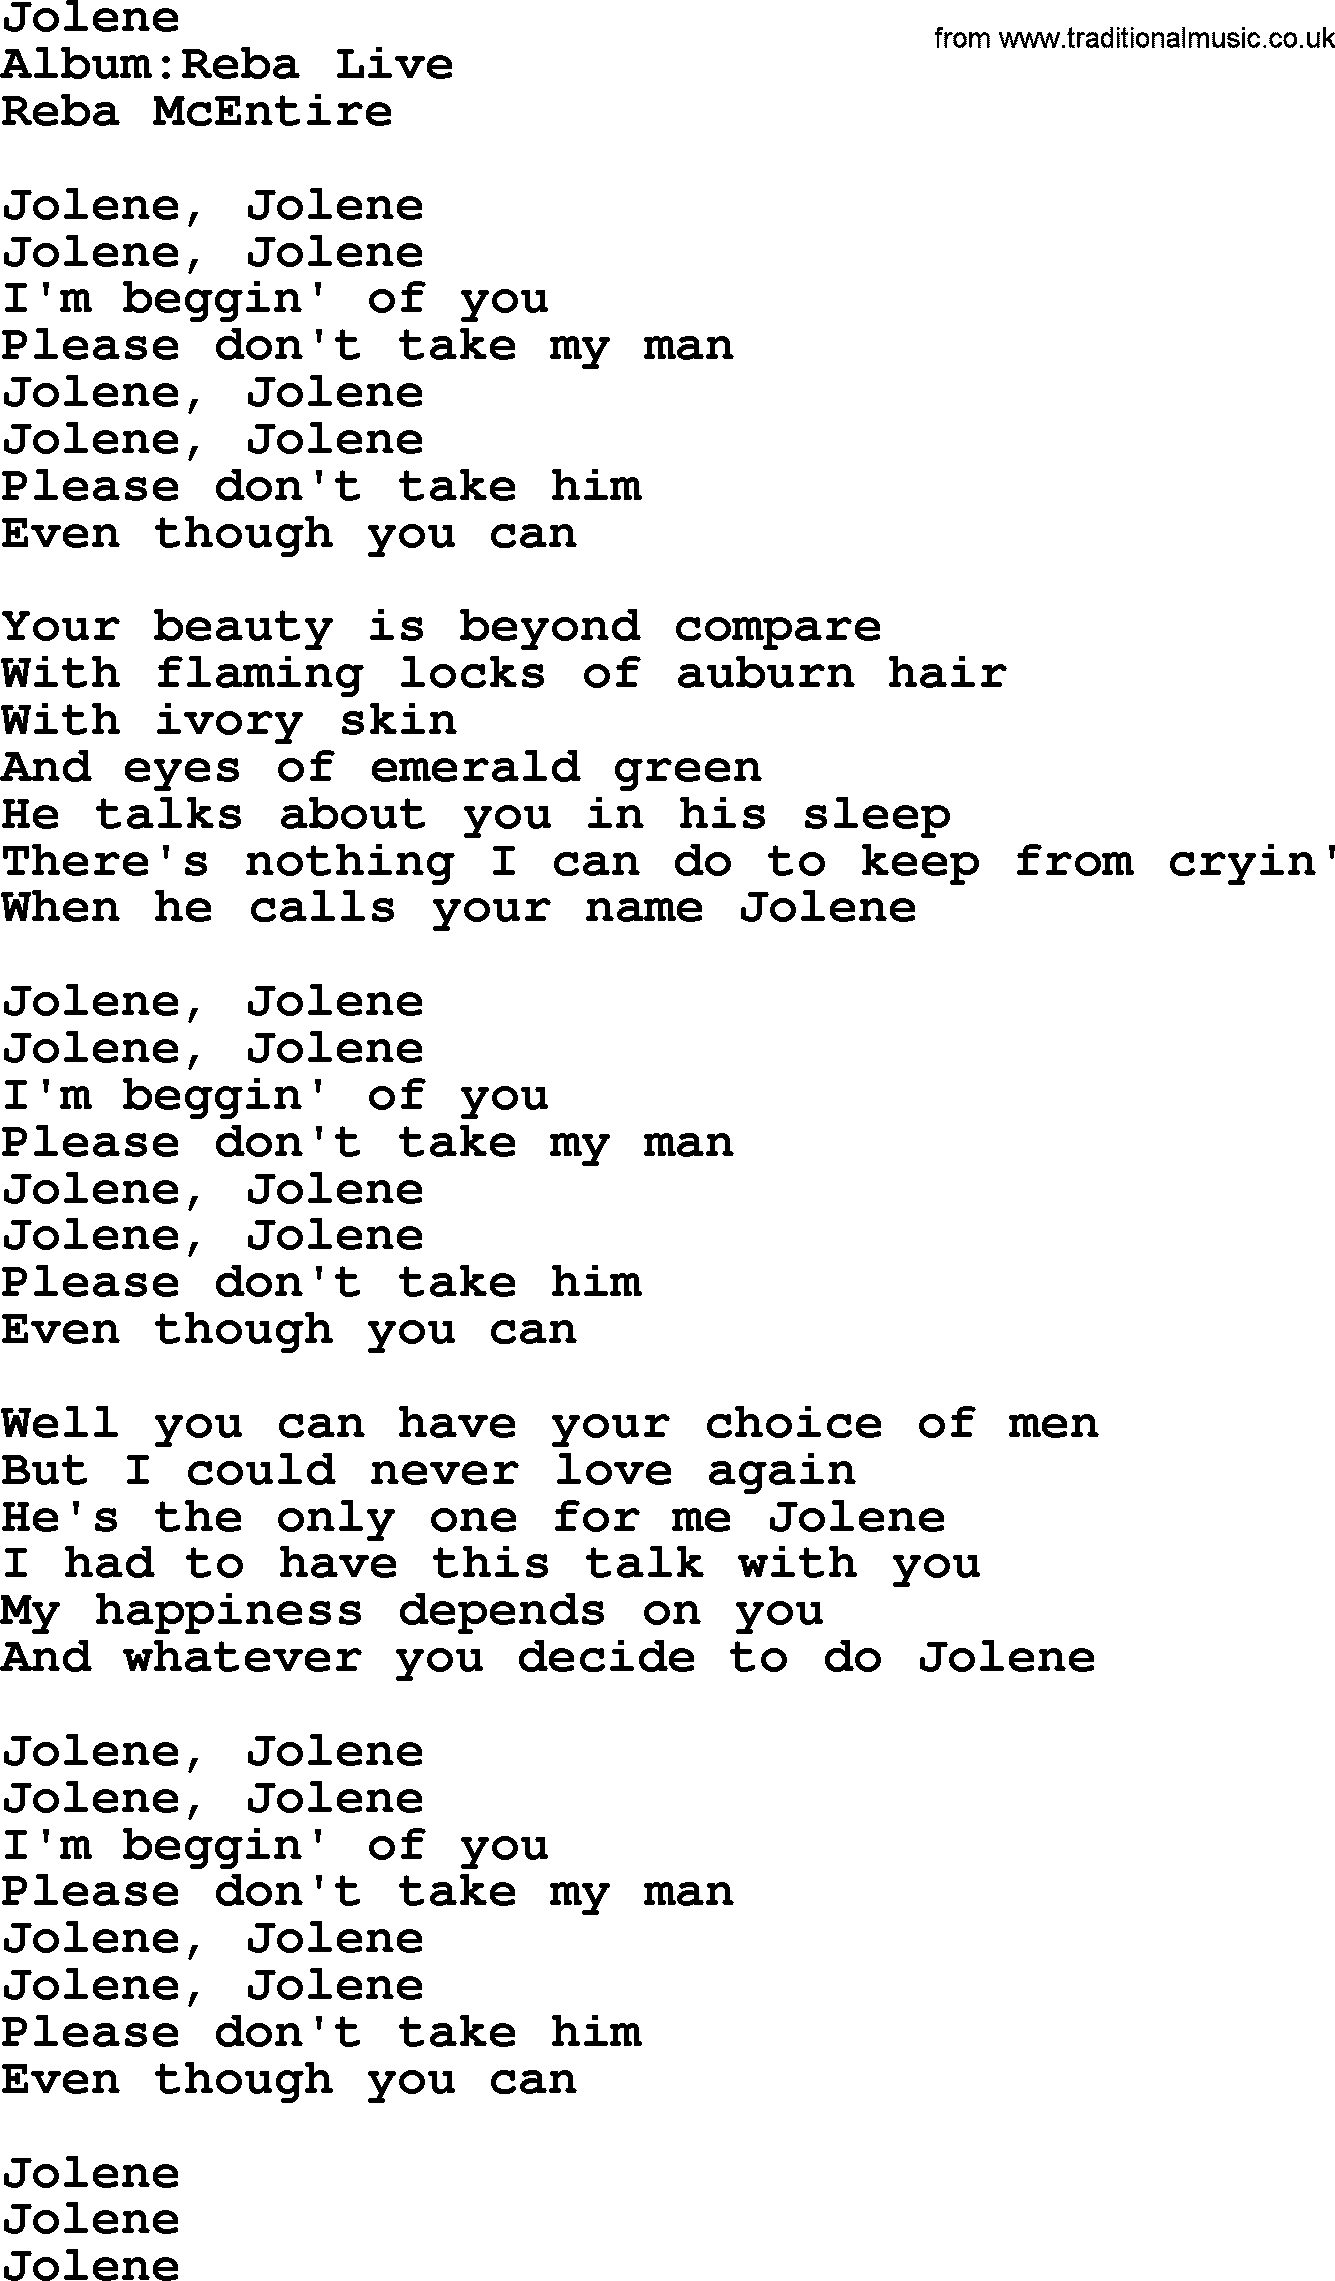 Reba McEntire song: Jolene lyrics